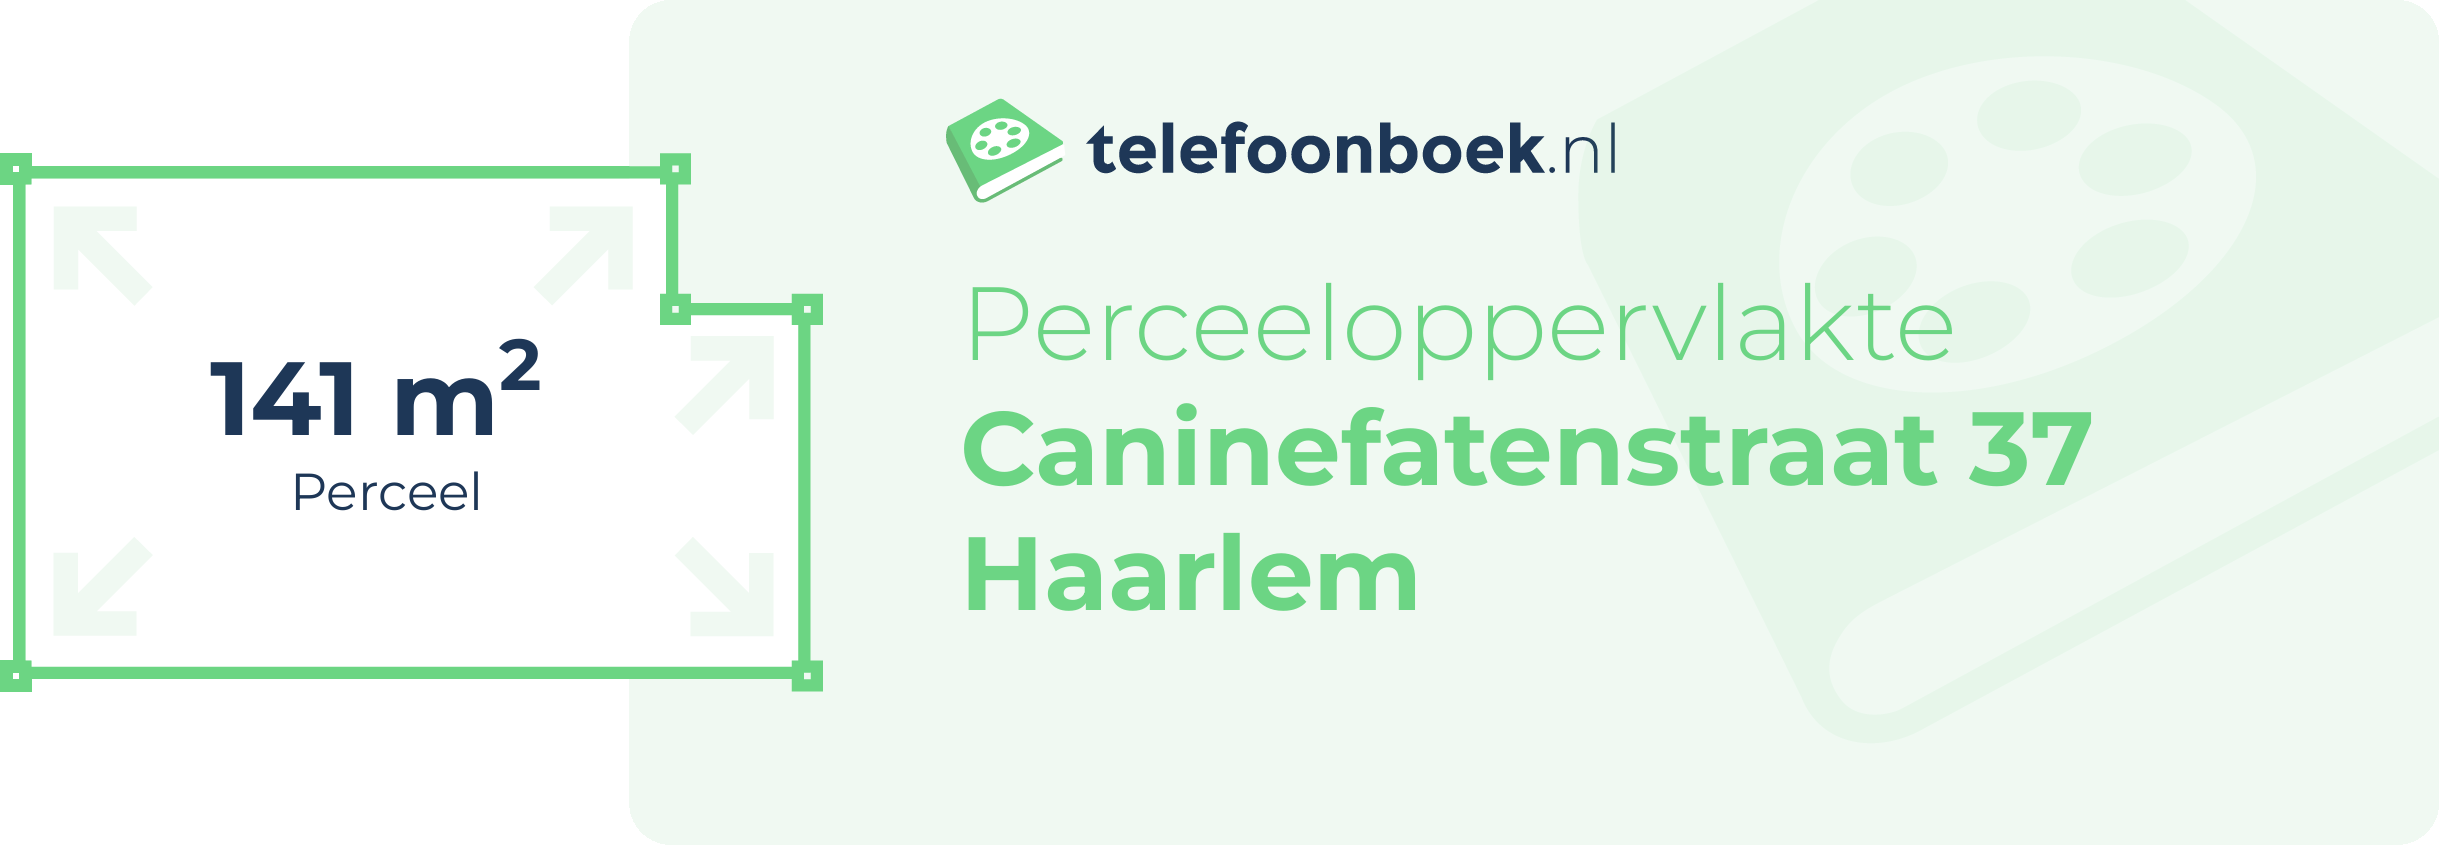 Perceeloppervlakte Caninefatenstraat 37 Haarlem